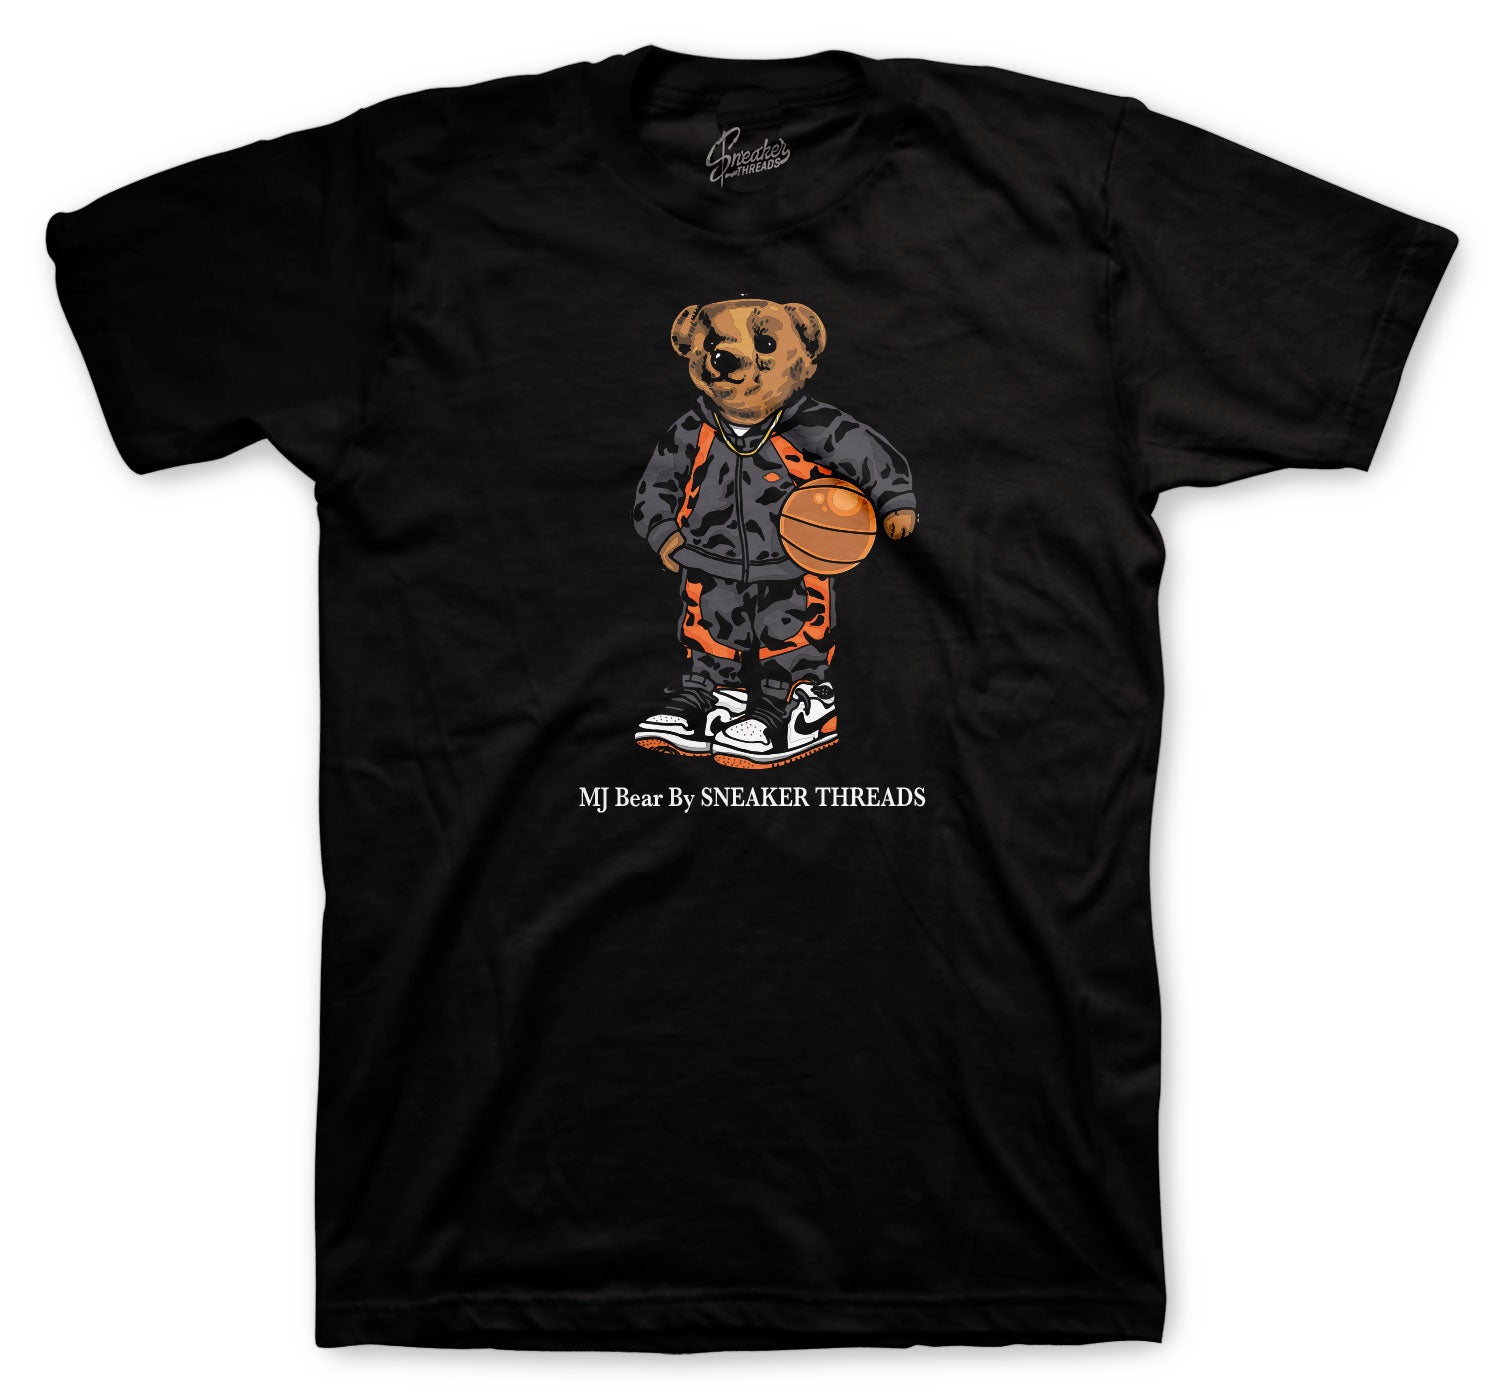 Retro 1 Electro Orange Shirt - Mj Bear - Black